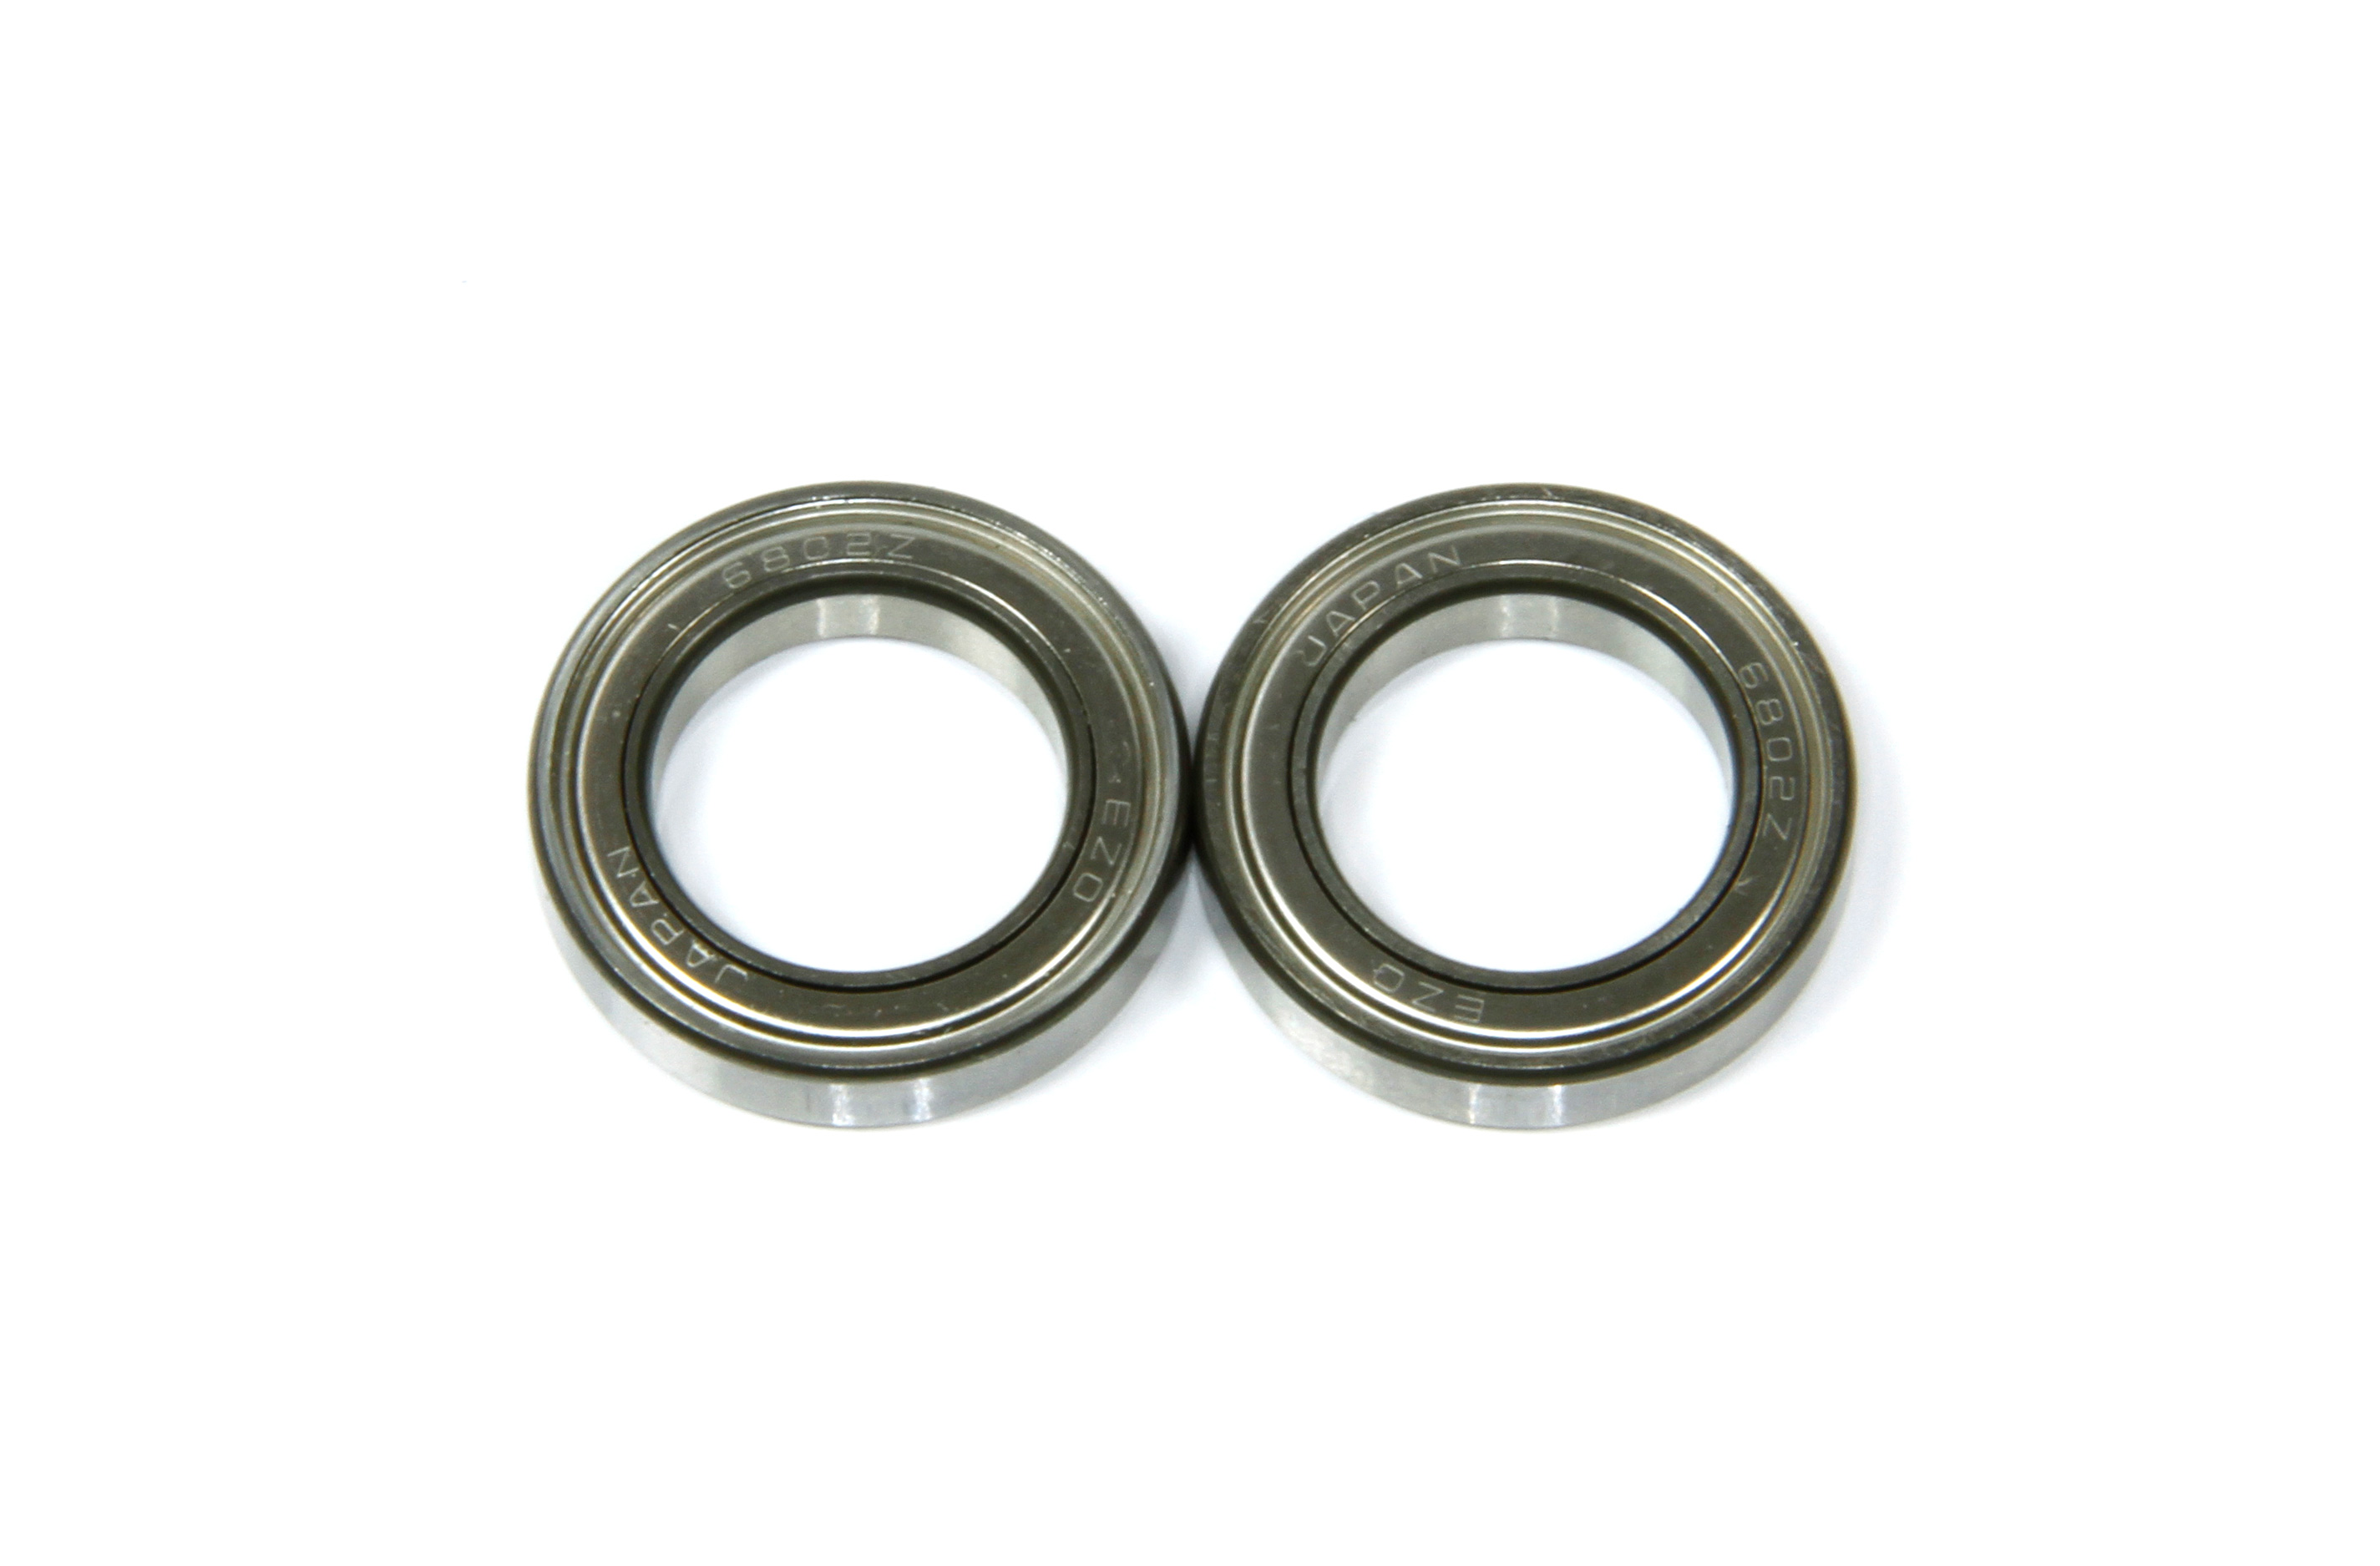 2012-175/02 Diff.ball bearing 15/24/5, set of 2